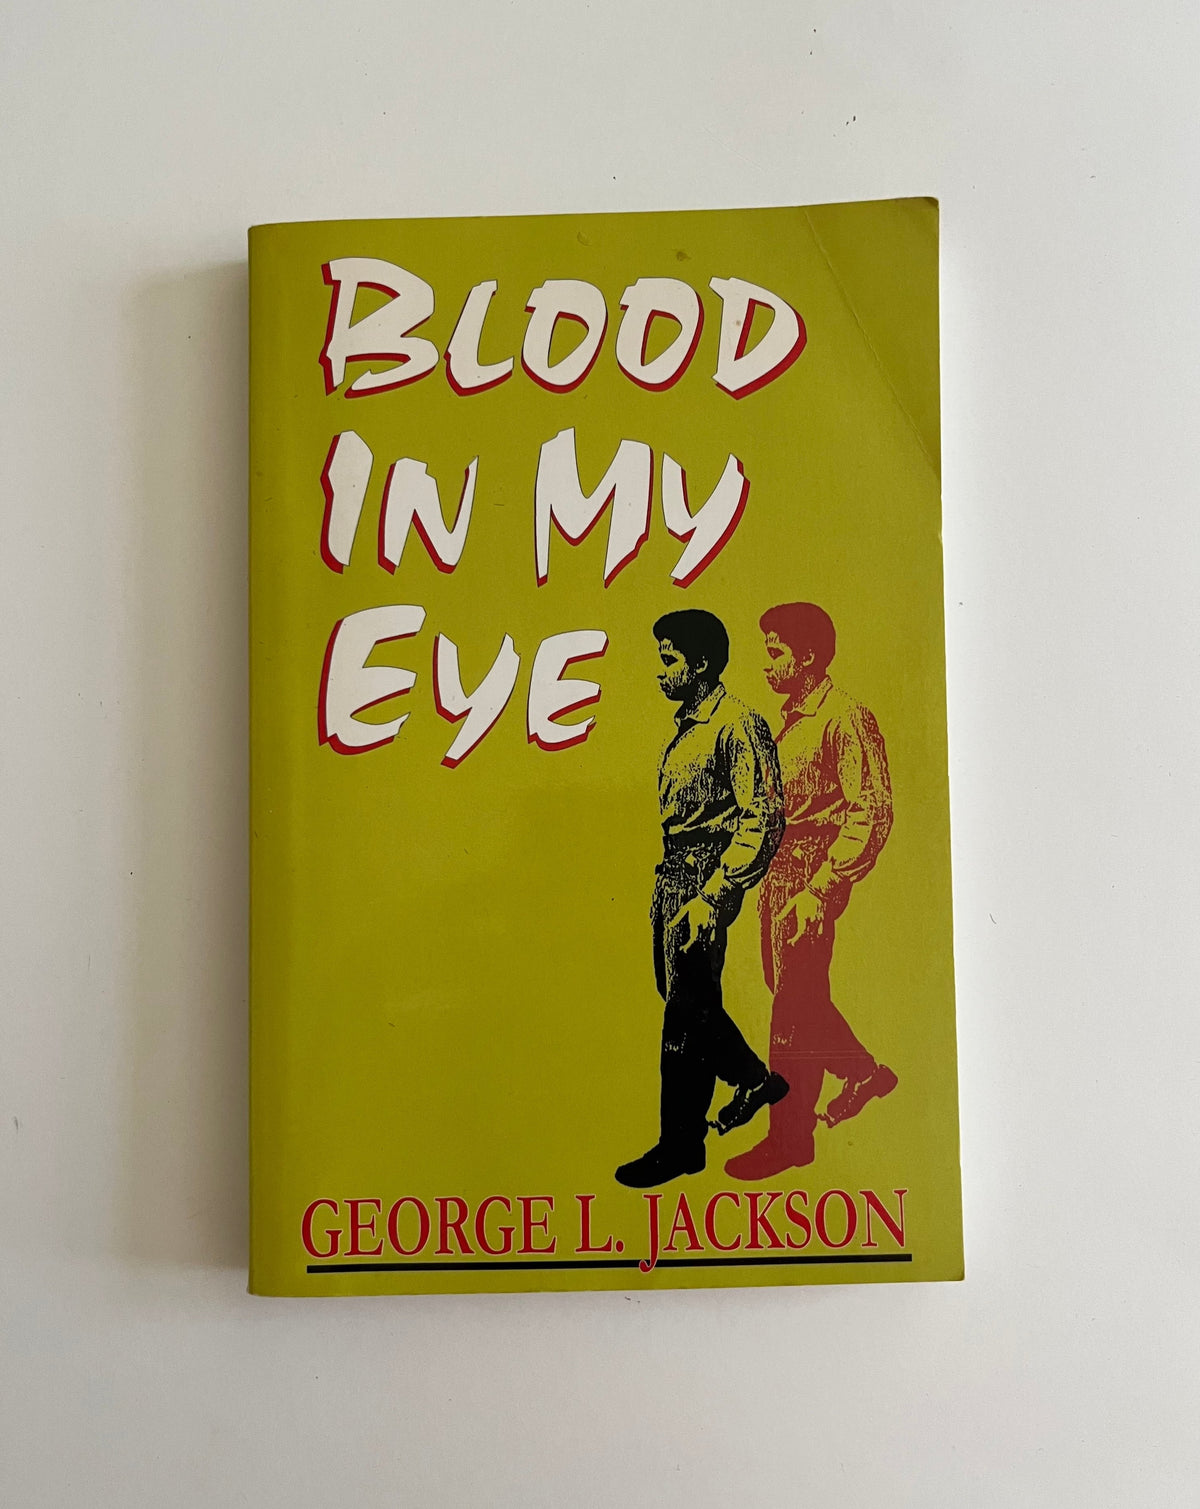 Blood in My Eye by George Jackson